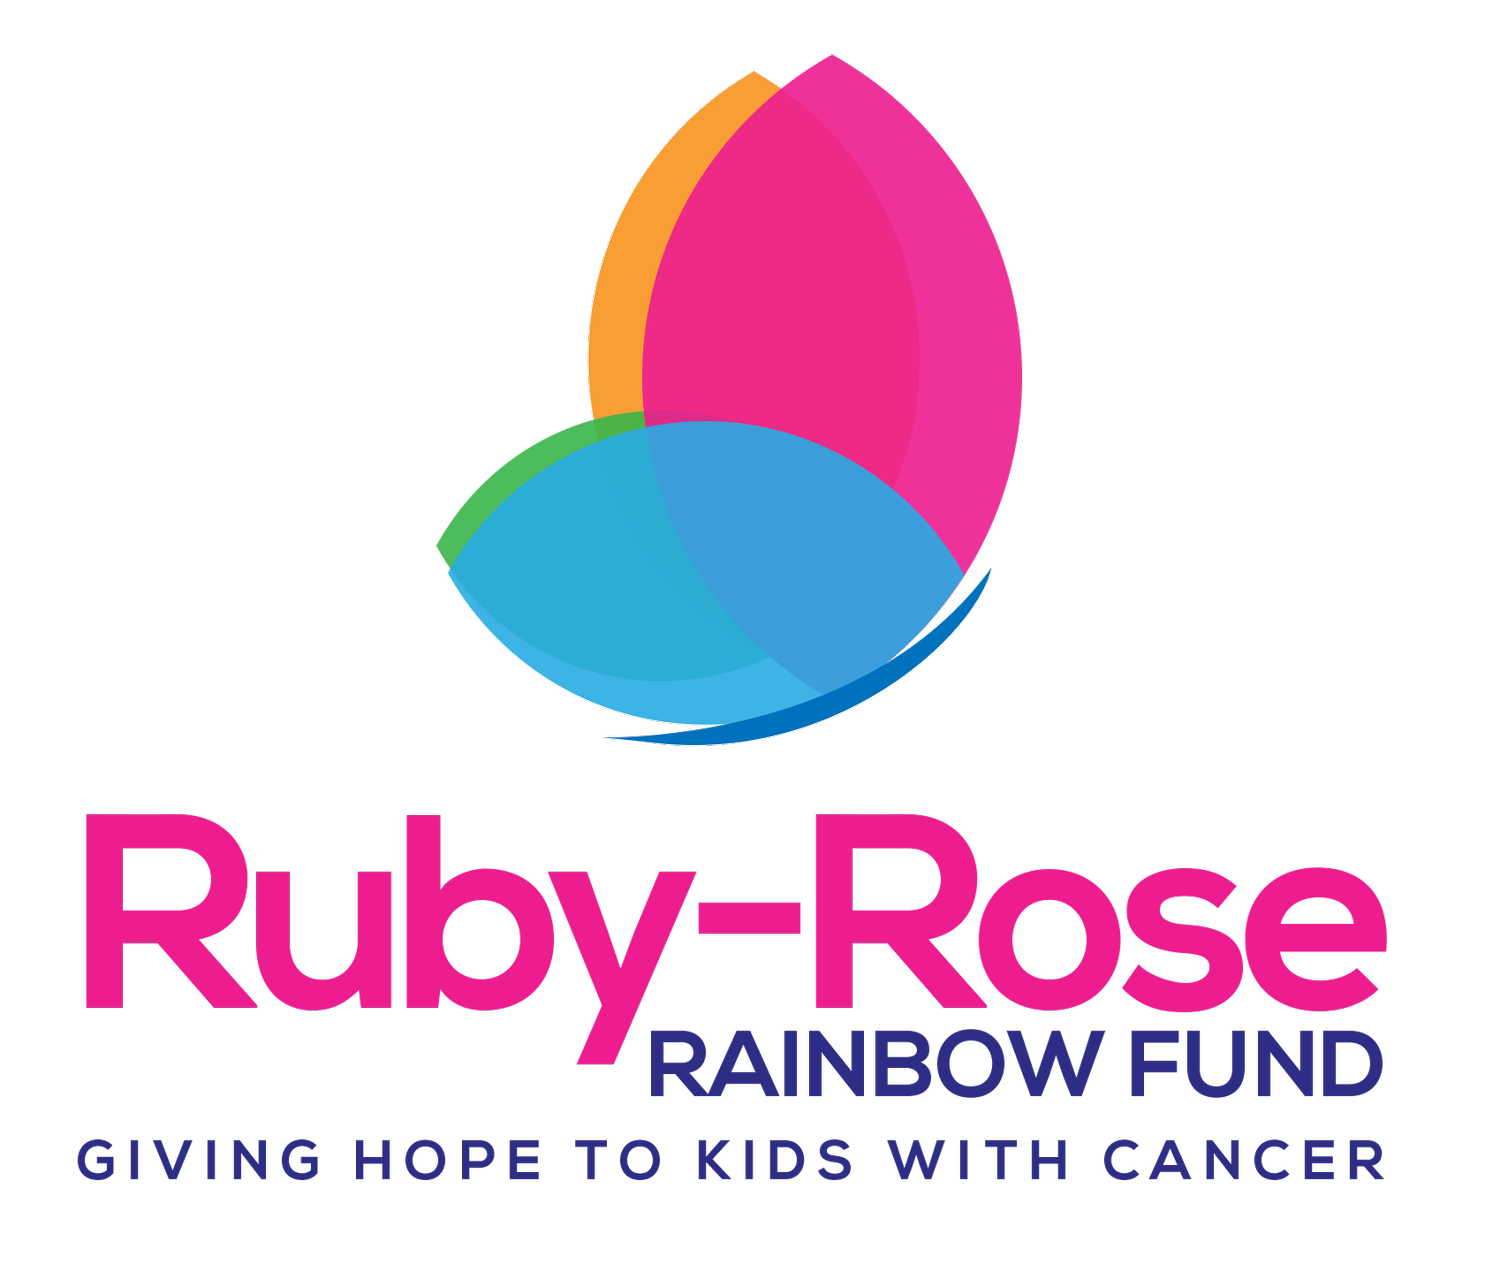 Ruby-Rose Rainbow Fund